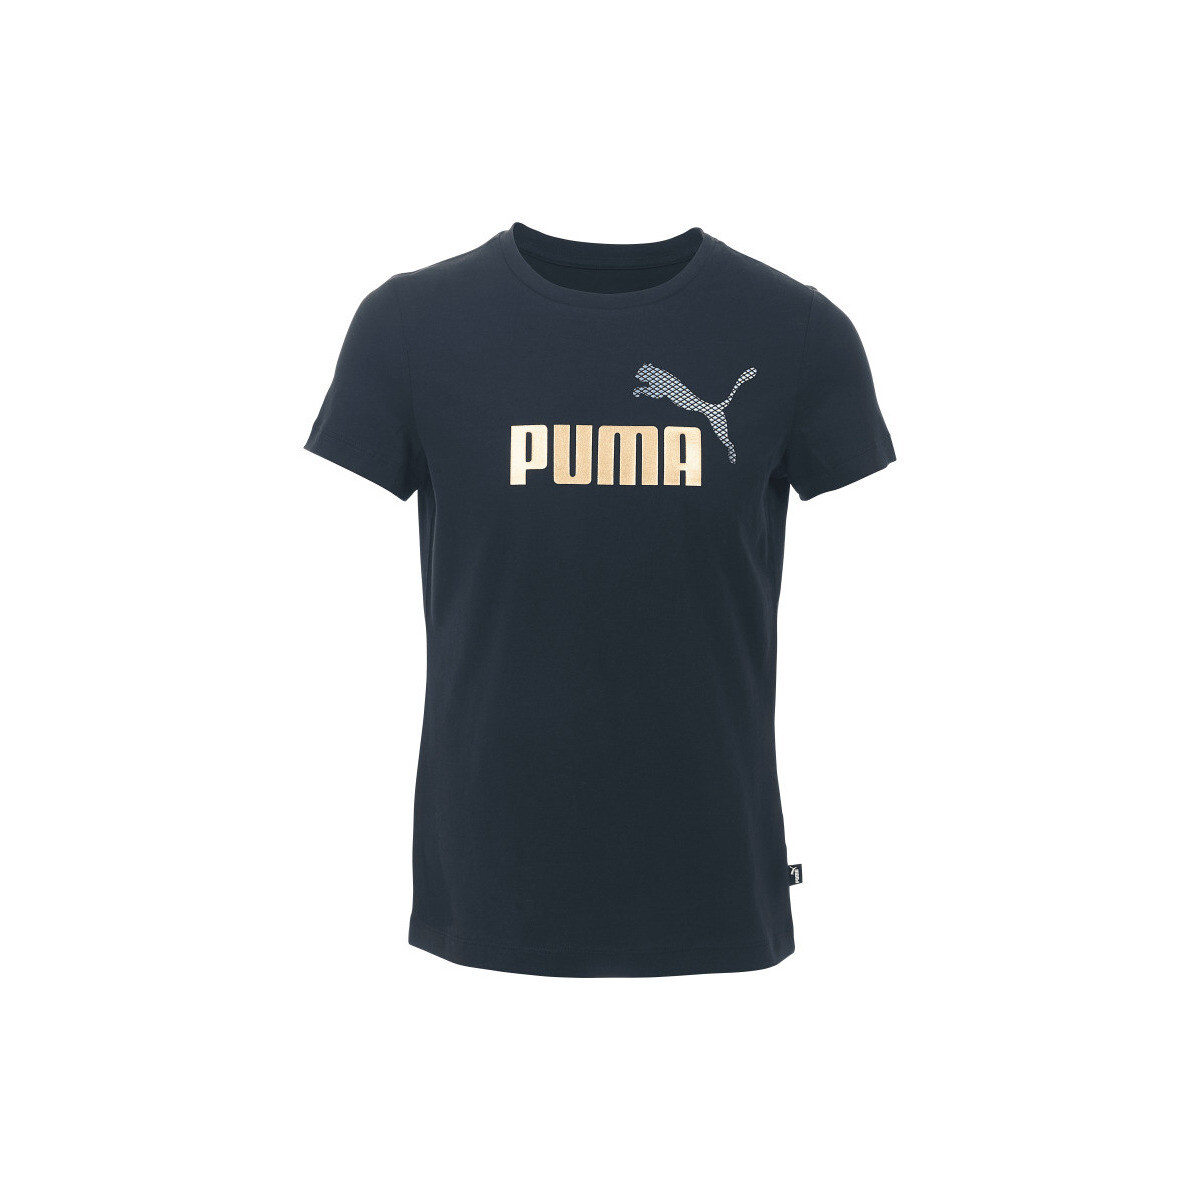 Vêtements Fille T-shirts manches courtes Puma TEE SHIRT G ESS+ MAID GRAF - Noir - 140 Noir